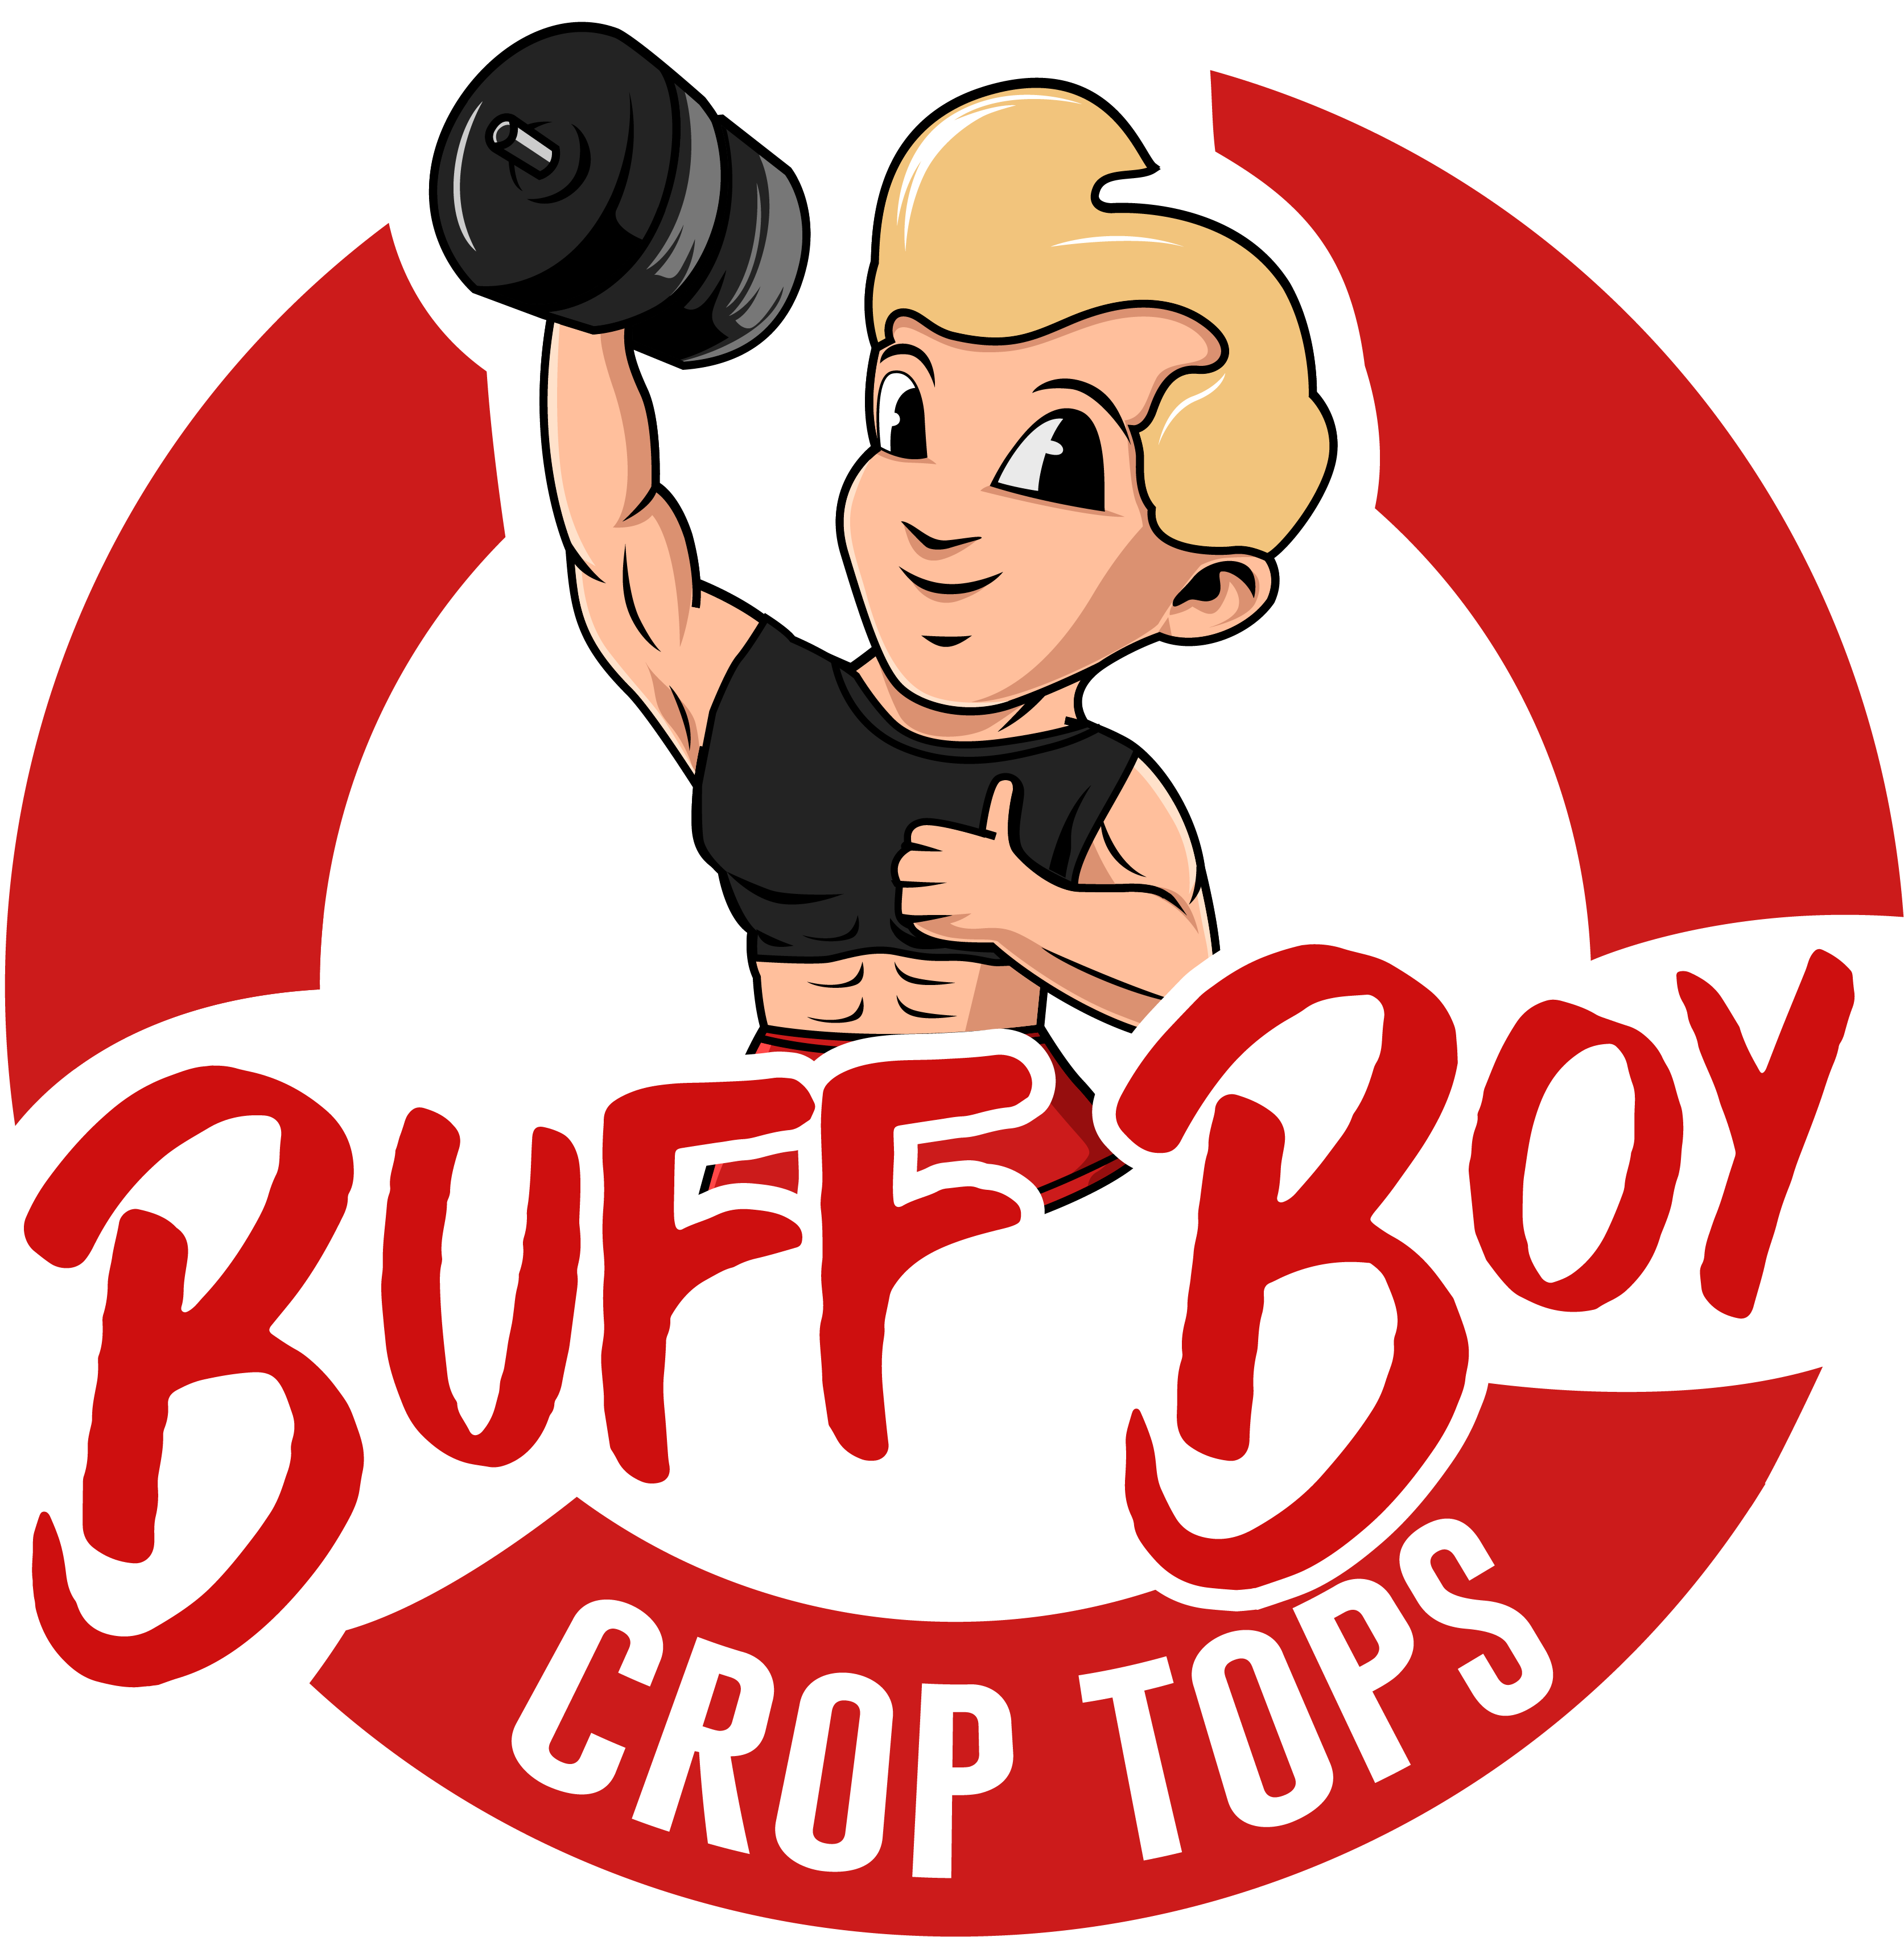 Buff Boy Crop Tops Logo 